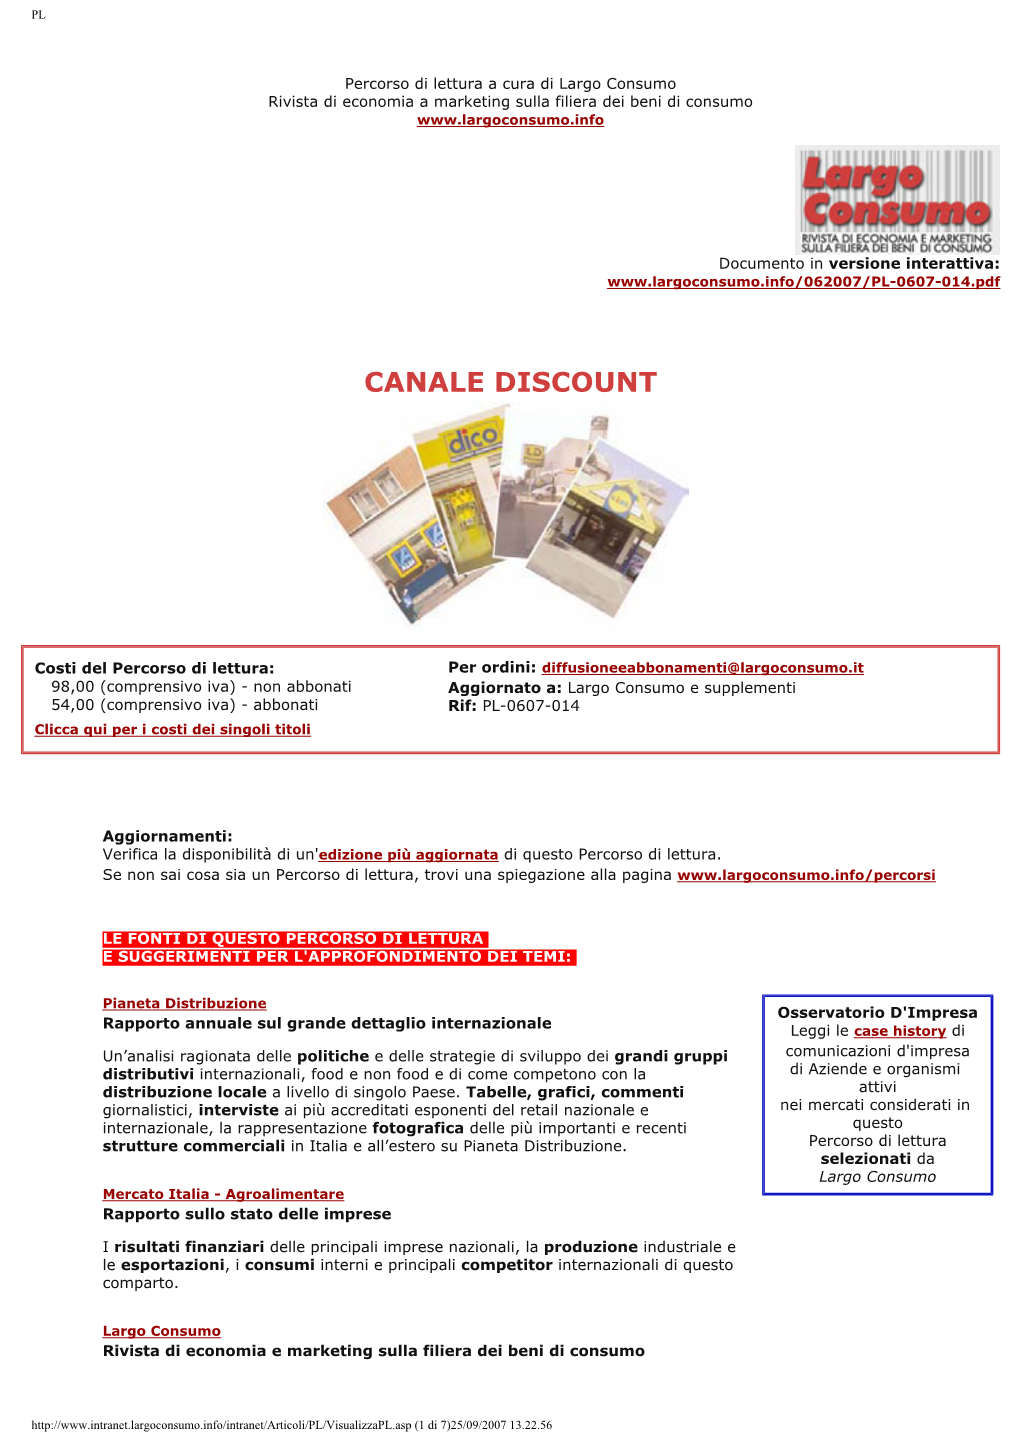 Canale Discount in Italia